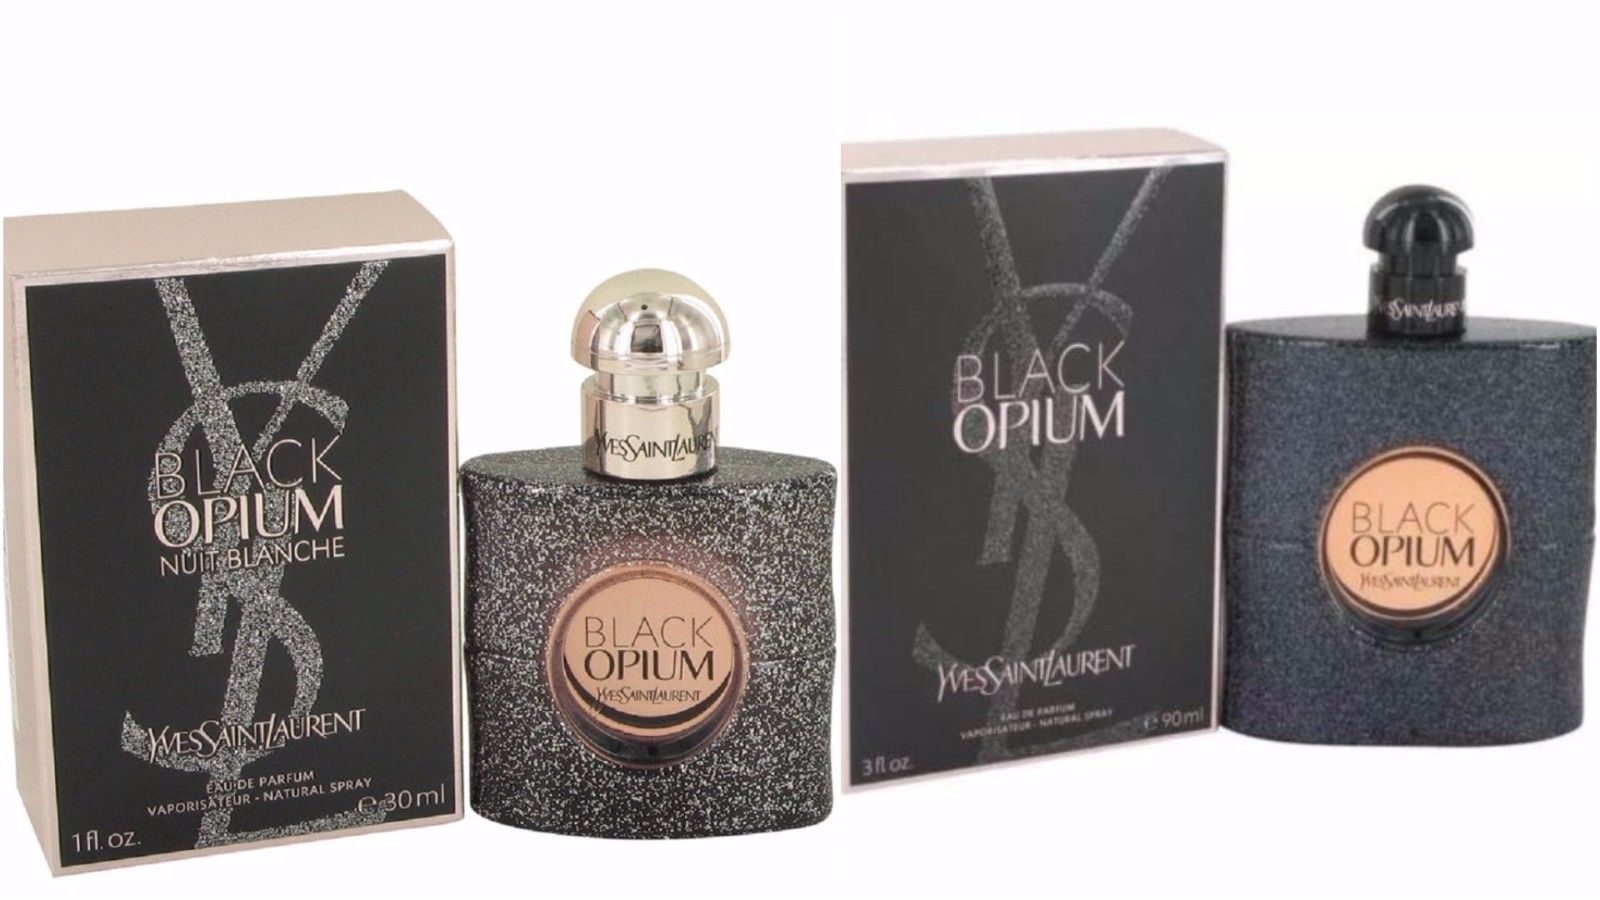 BLACK OPIUM OR Nuit Blanche Perfume Yves Saint Laurent EDP Spray 1 oz 3 oz WOMEN - $89.99 - $249.99